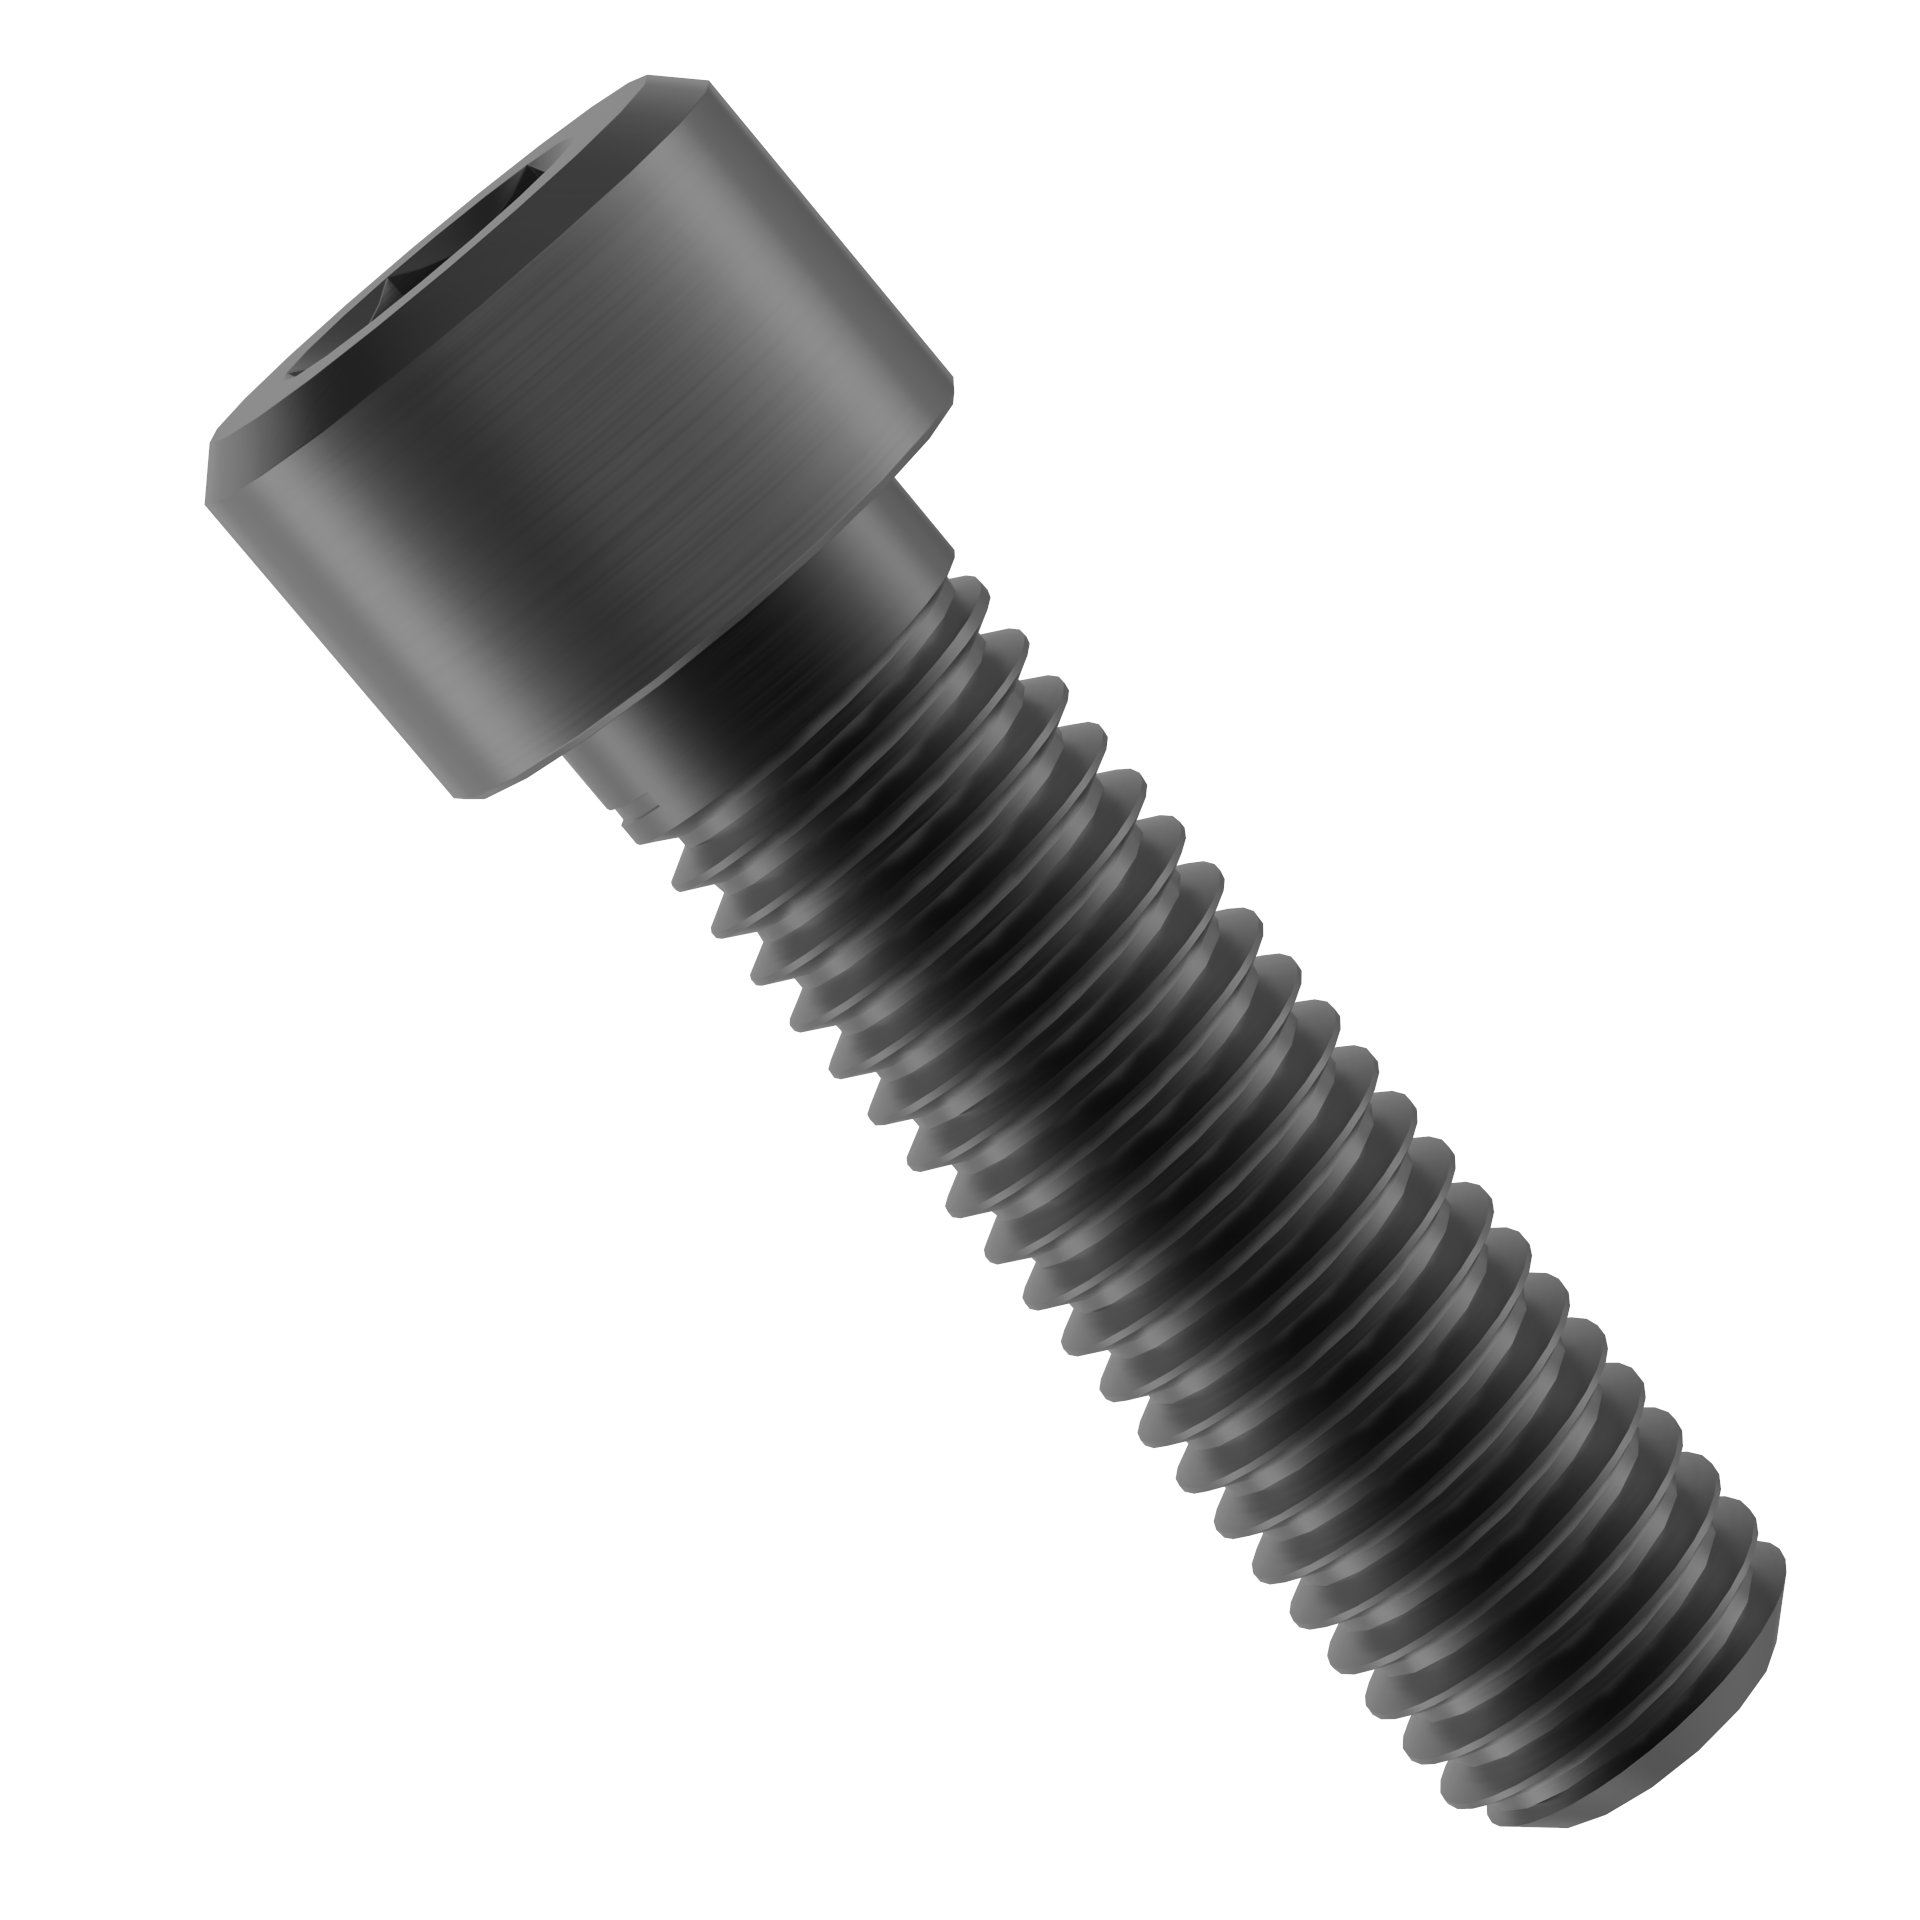 280pcs Stainless Steel Hex Socket Cap Head Machine Screws Precise Bolts & Nuts Assortment Kit #8-32/#10-32/1/4-20 Multiple Sizes